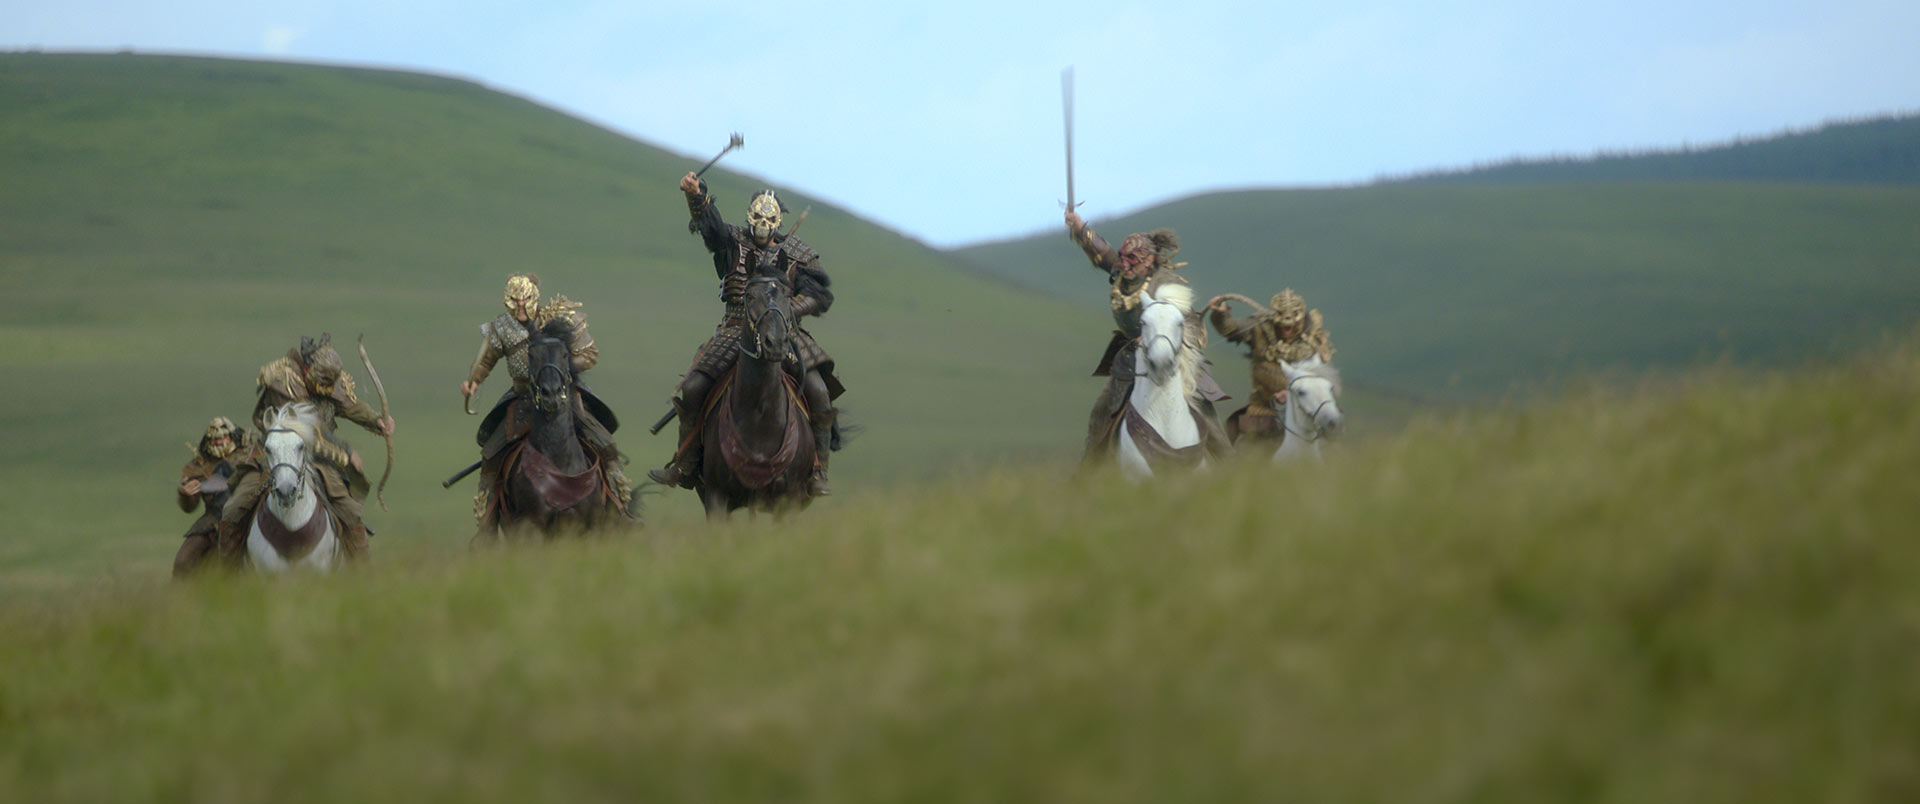 The skull-masked raiders chase the group on horseback.